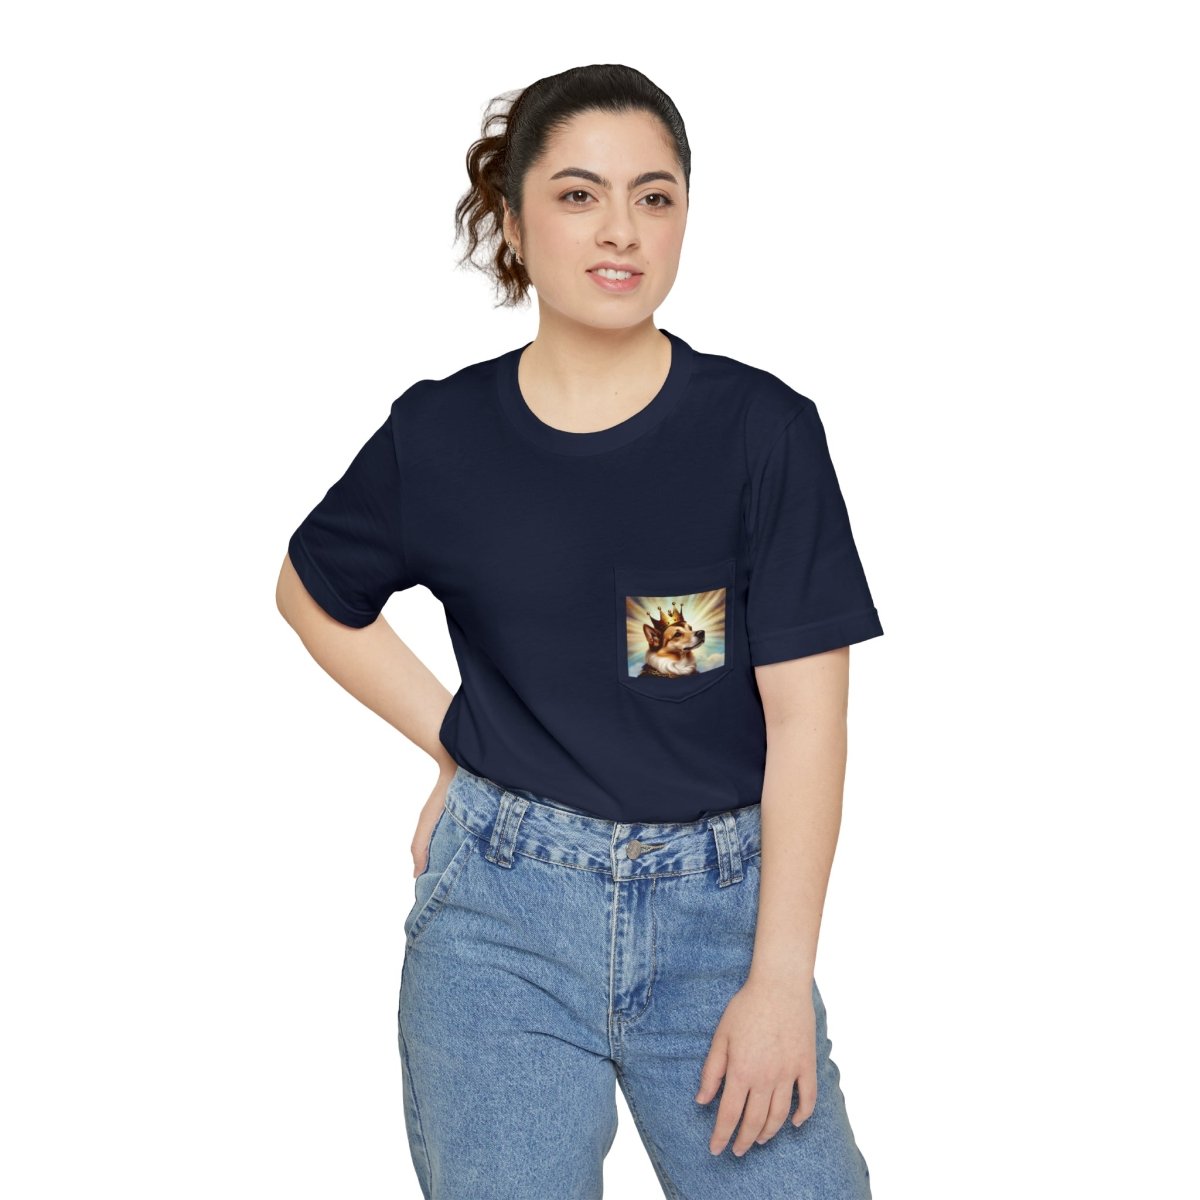 Royal Dog Pocket T-shirt - Style C - DarzyStore